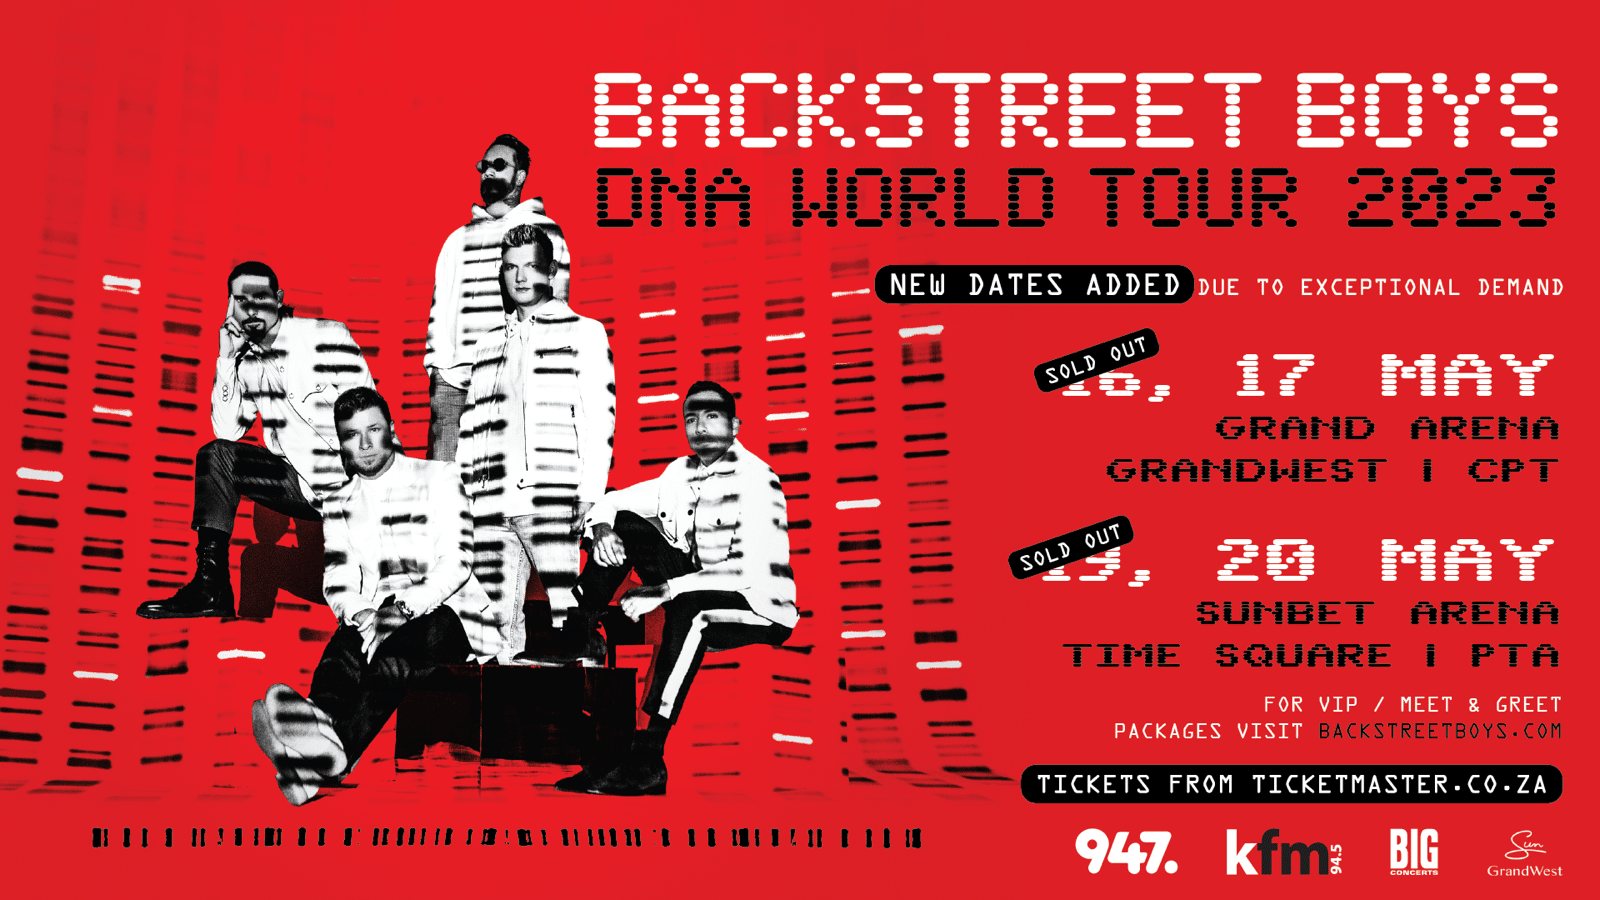 Backstreet Boys Tour South Africa